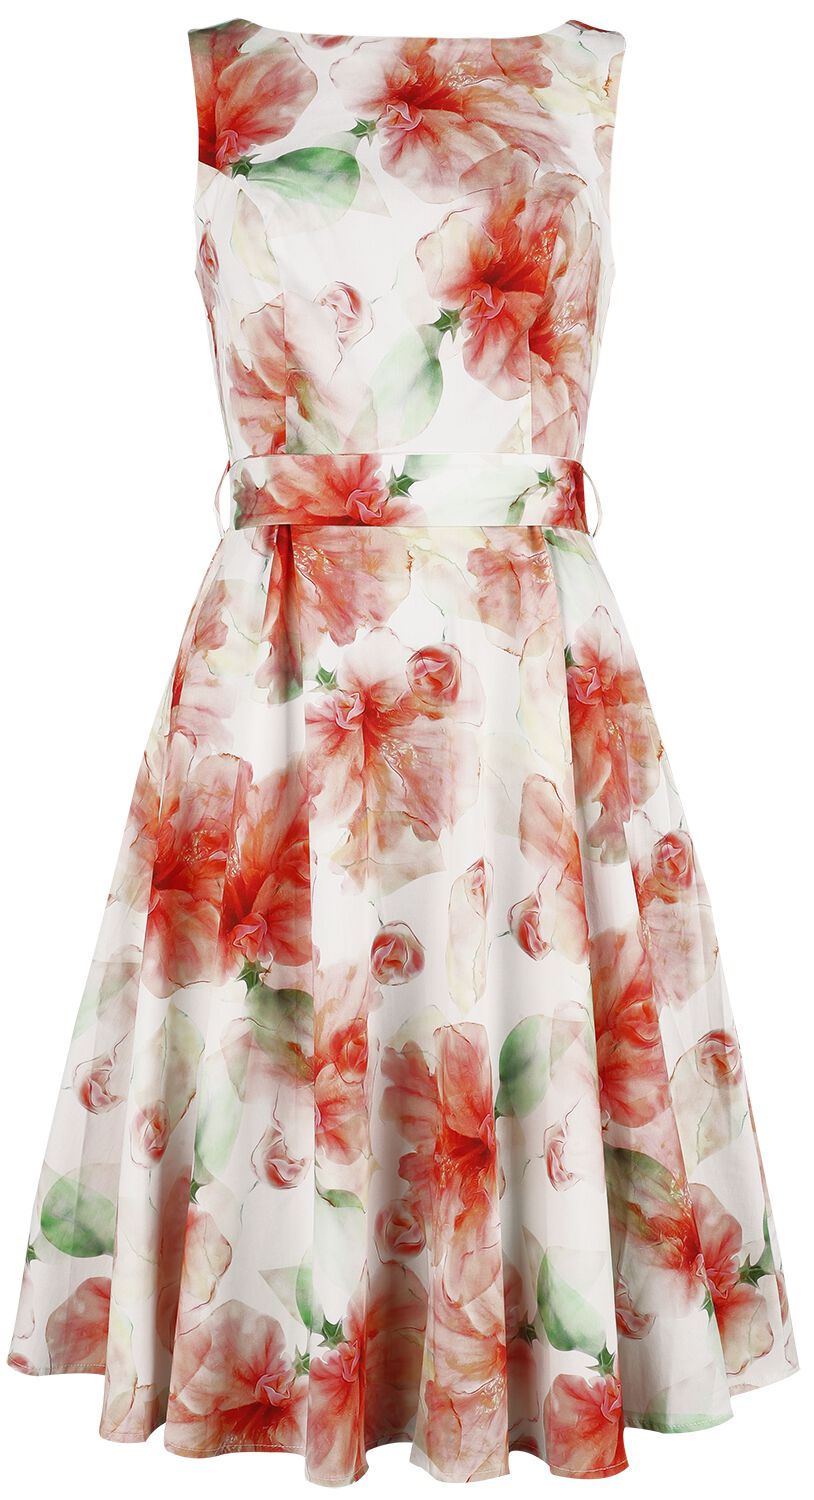 H&R London - Rockabilly Kleid knielang - Ayla Floral Swing Dress - XS bis 4XL - für Damen - Größe XXL - multicolor